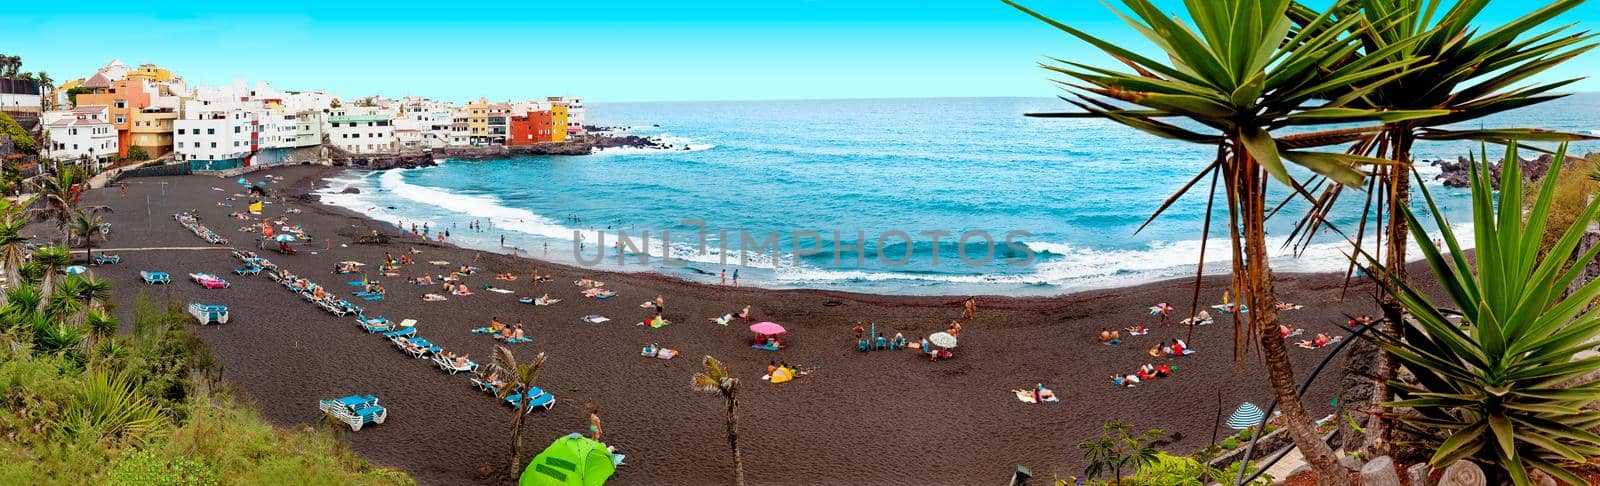 Tenerife beach scenery in Spain by carloscastilla